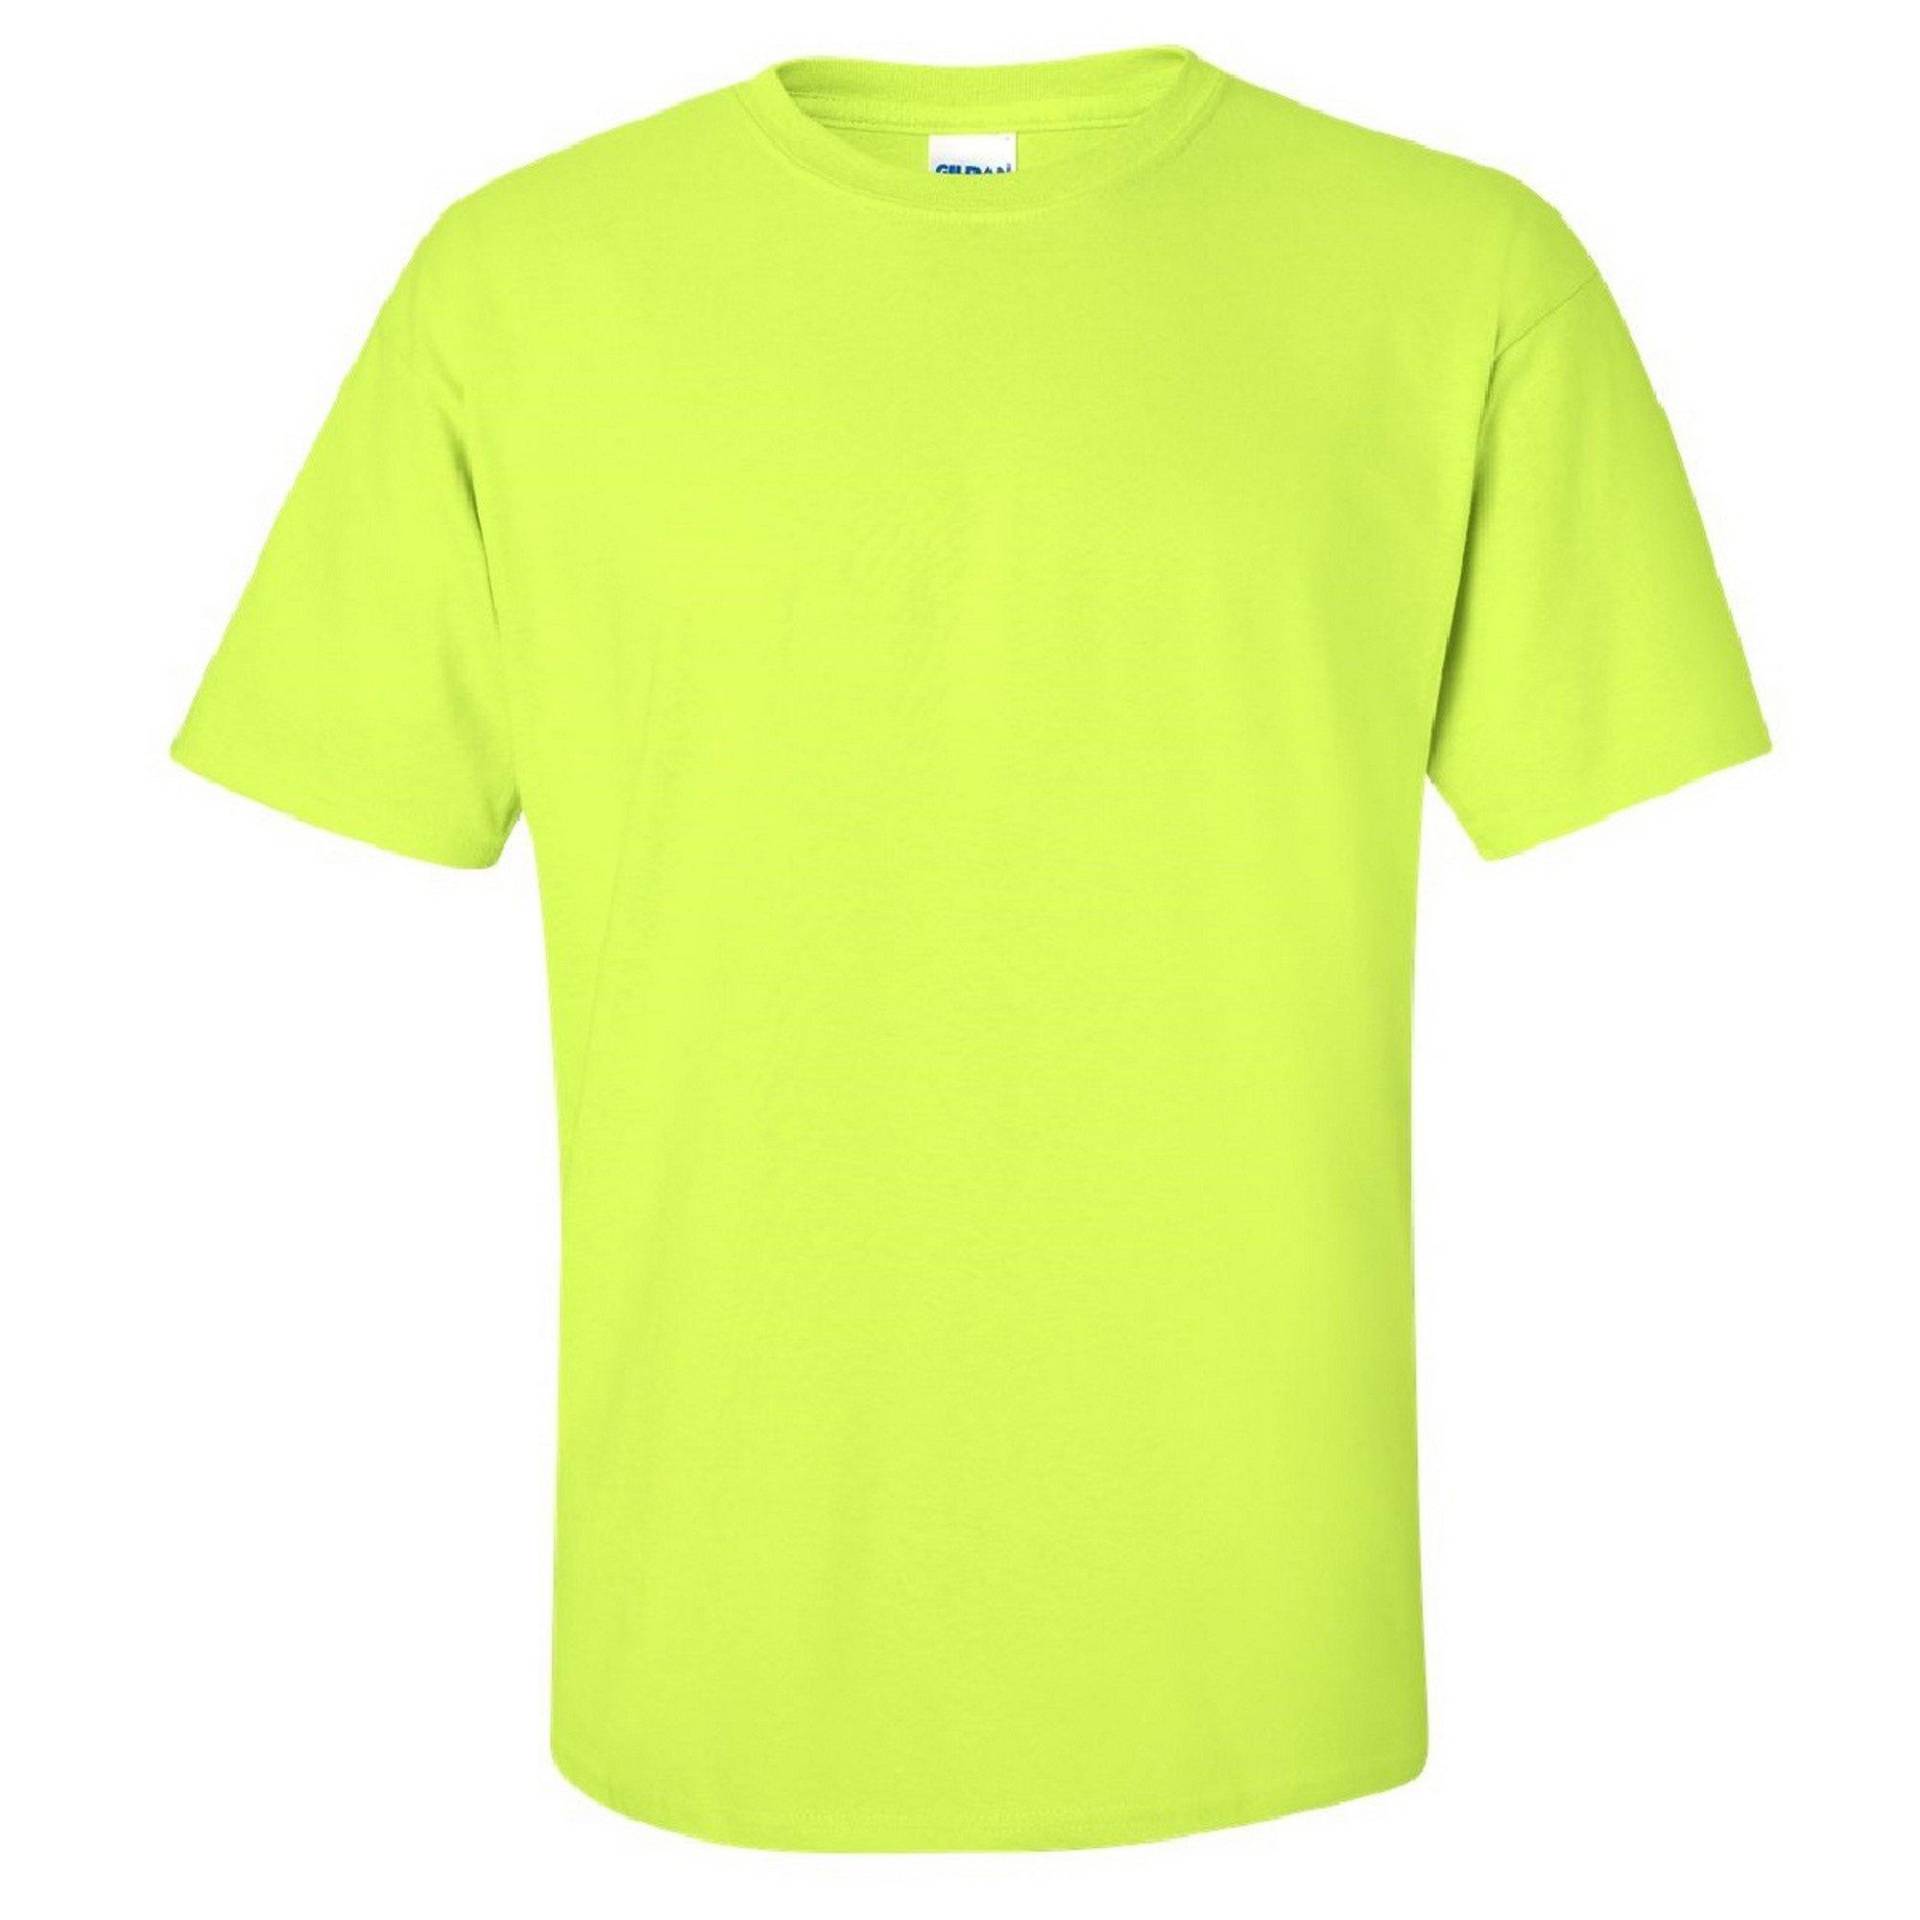 Ultra Tshirt Herren Gelb Bunt L von Gildan